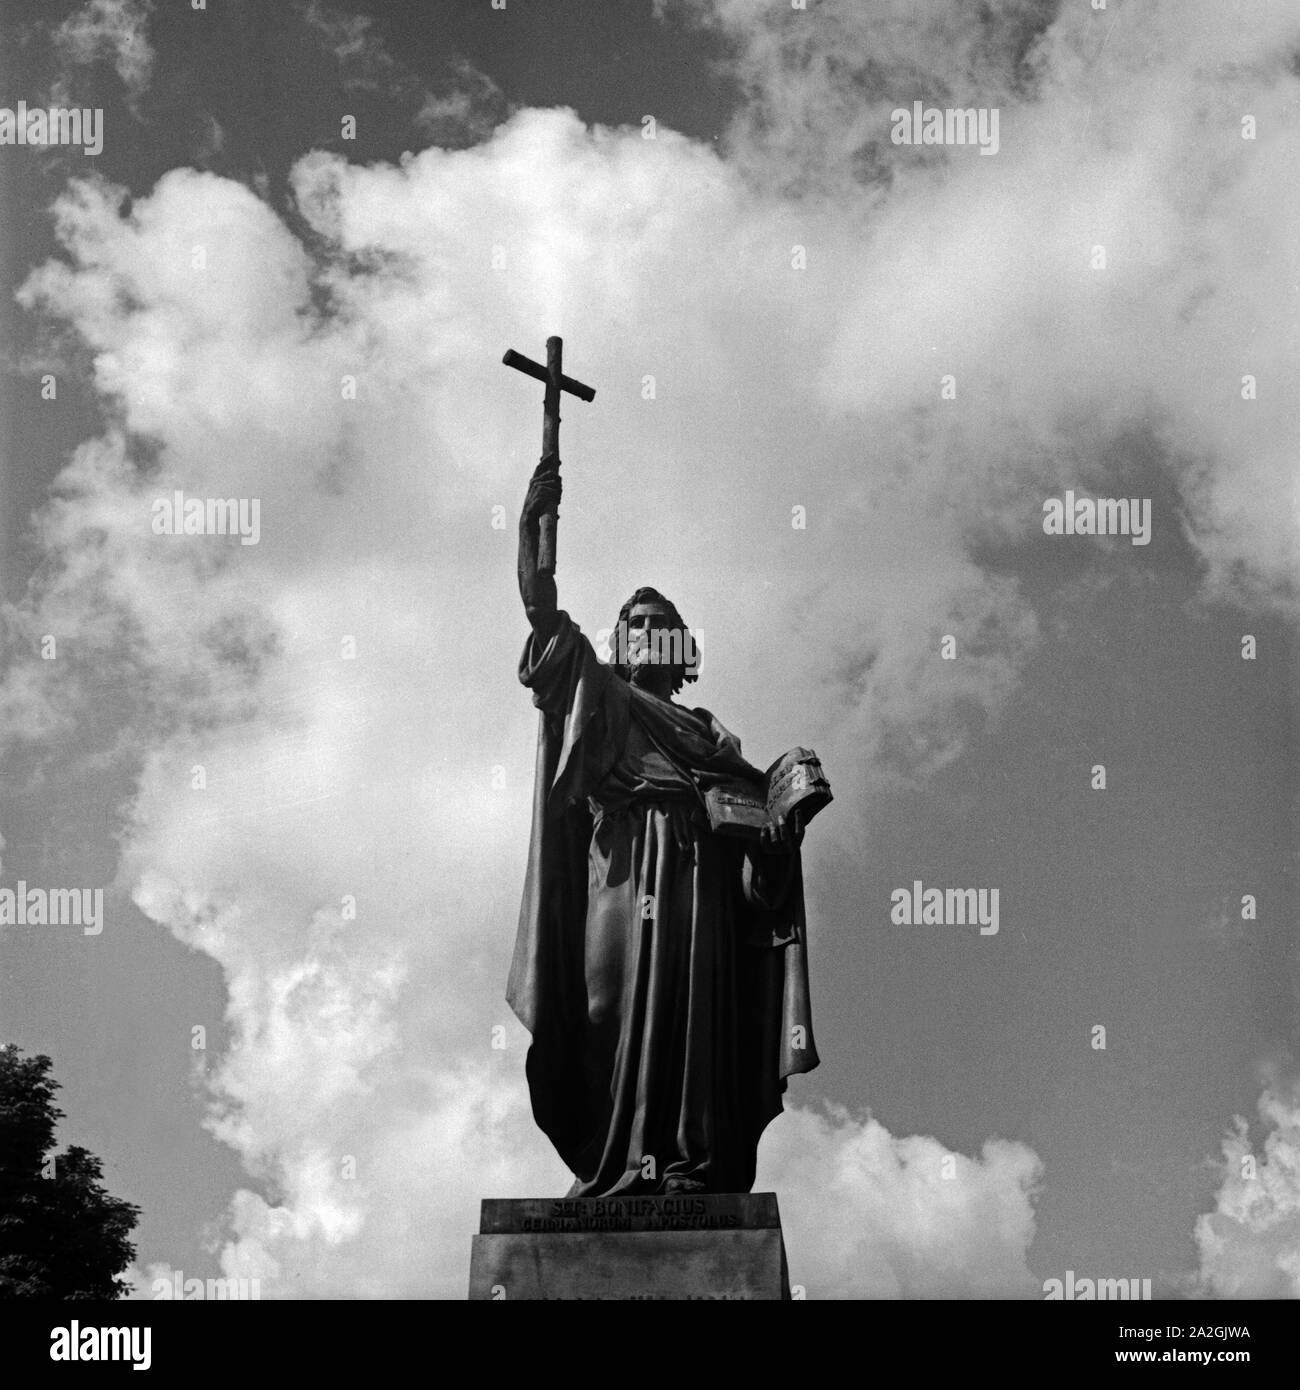 Die statua des Heiligen Bonifatius vor dem Stadtschloss a Fulda, Deutschland 1930er Jahre. Scultura raffigurante San Bonifacio di fronte a Fulda città castello, Germania 1930s. Foto Stock